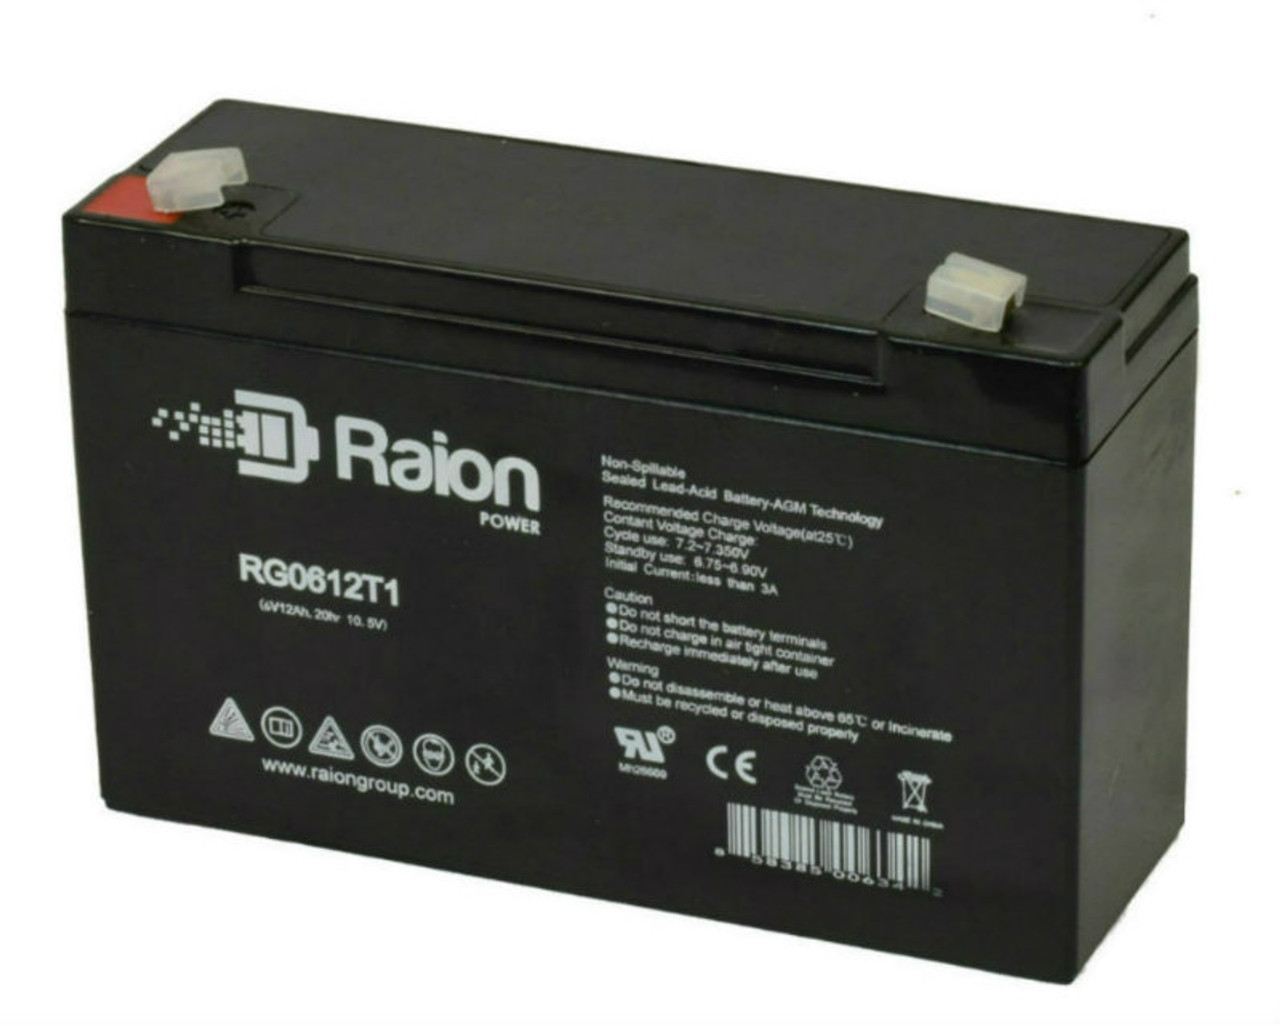 Raion Power RG06120T1 Replacement Battery for Critikon Simplicity Volumetric Pump Medical Equipment